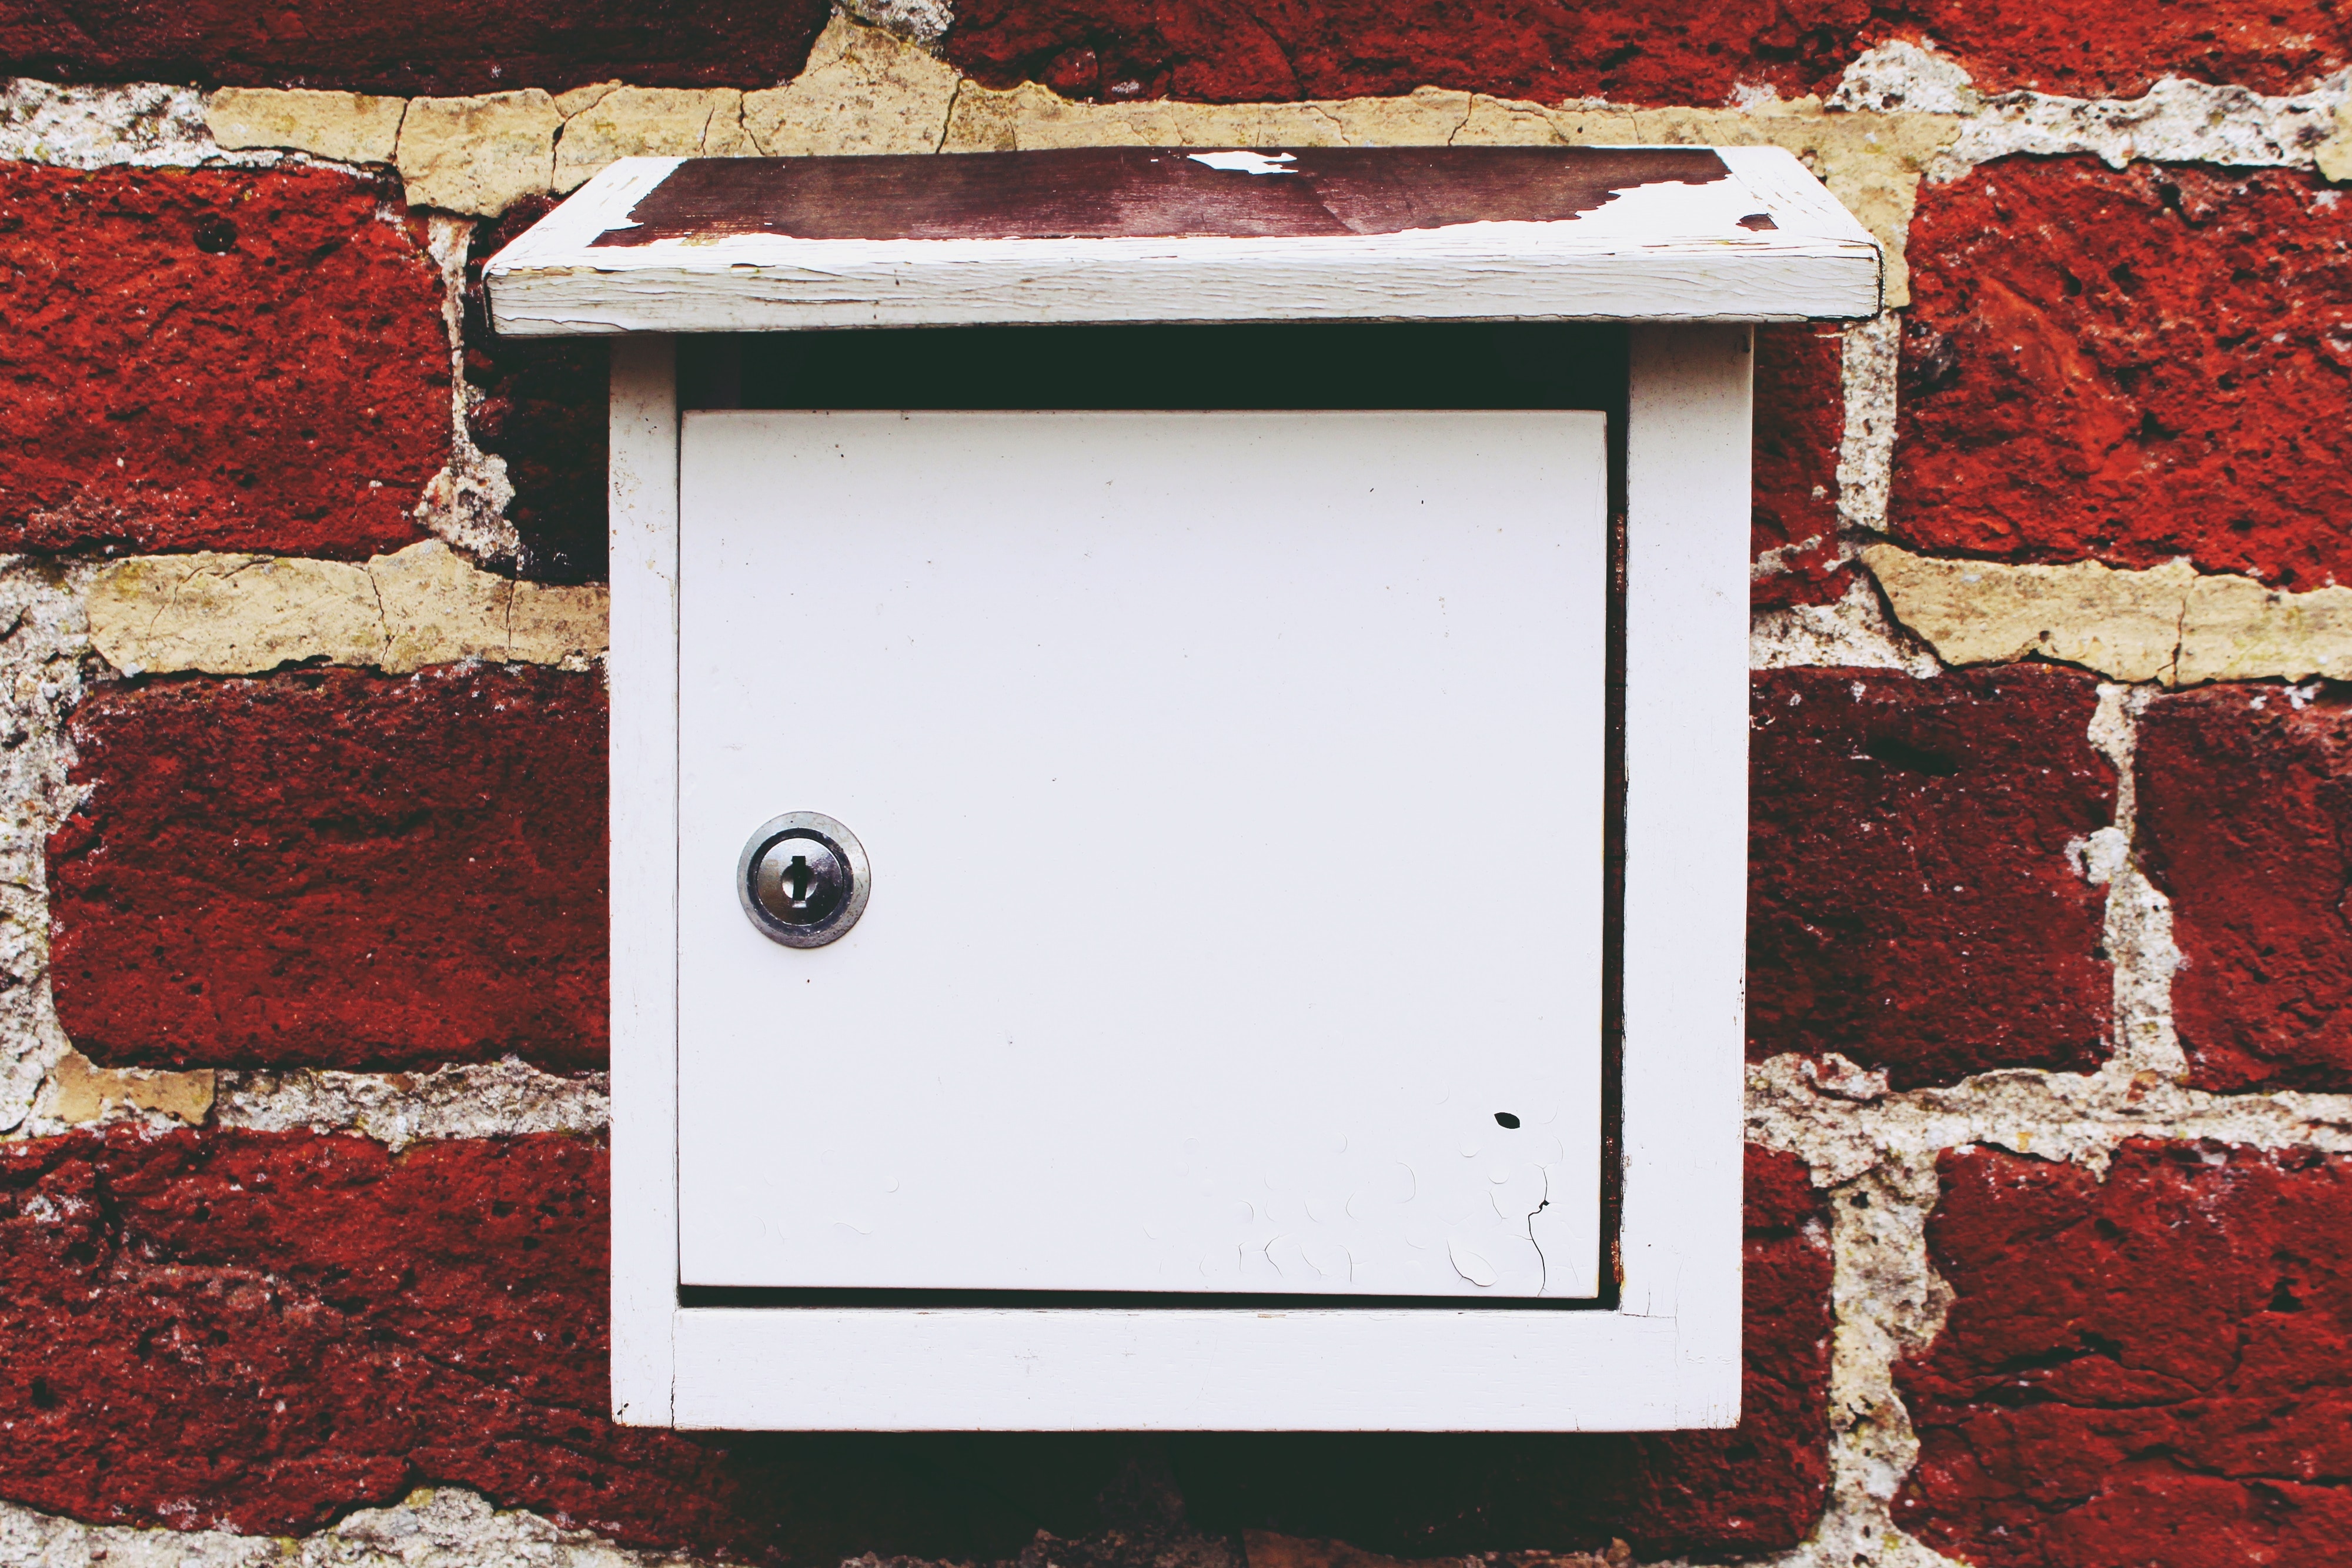 Wall, Post, Mailbox, Letter Box, Box, brick wall, red